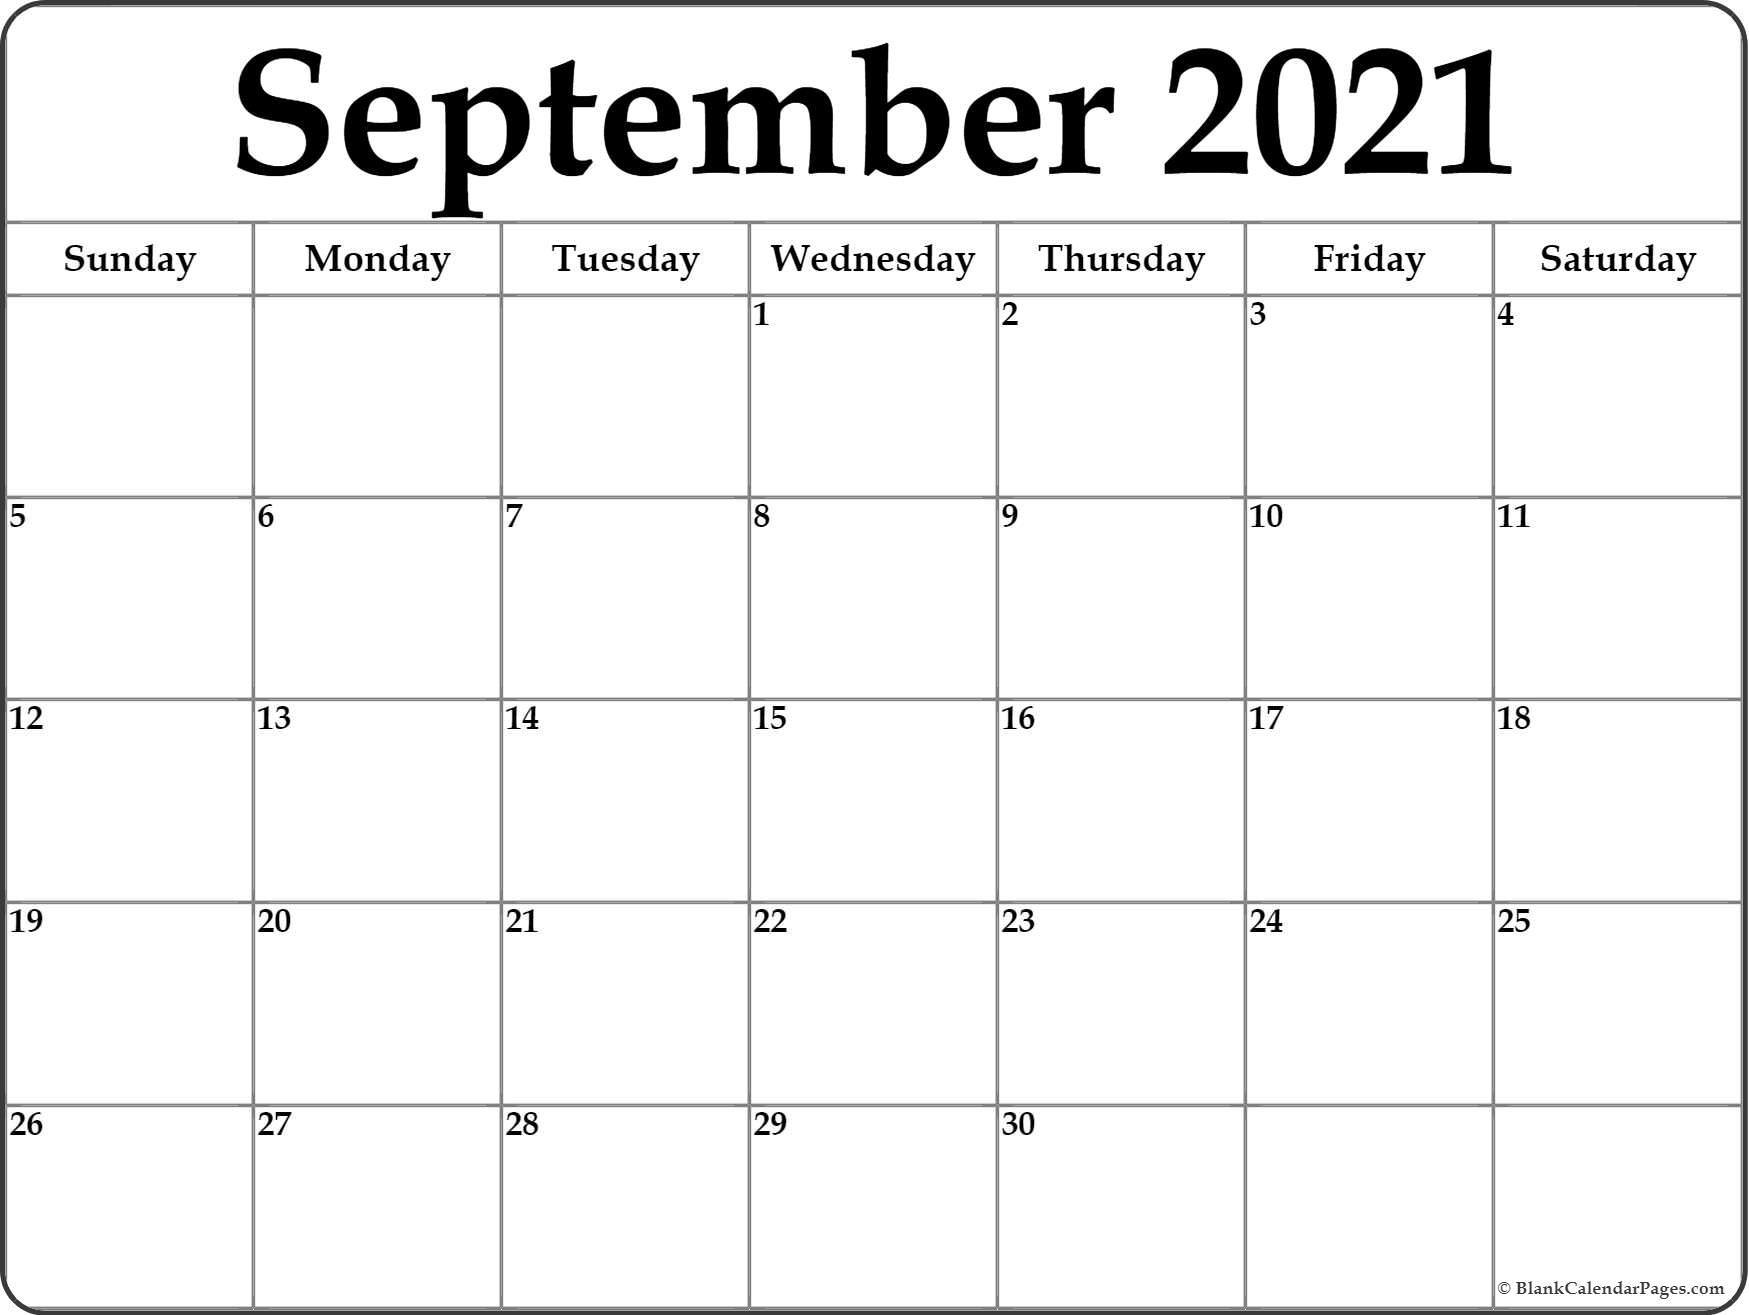 Catch Blamk Calander For August And September 2021